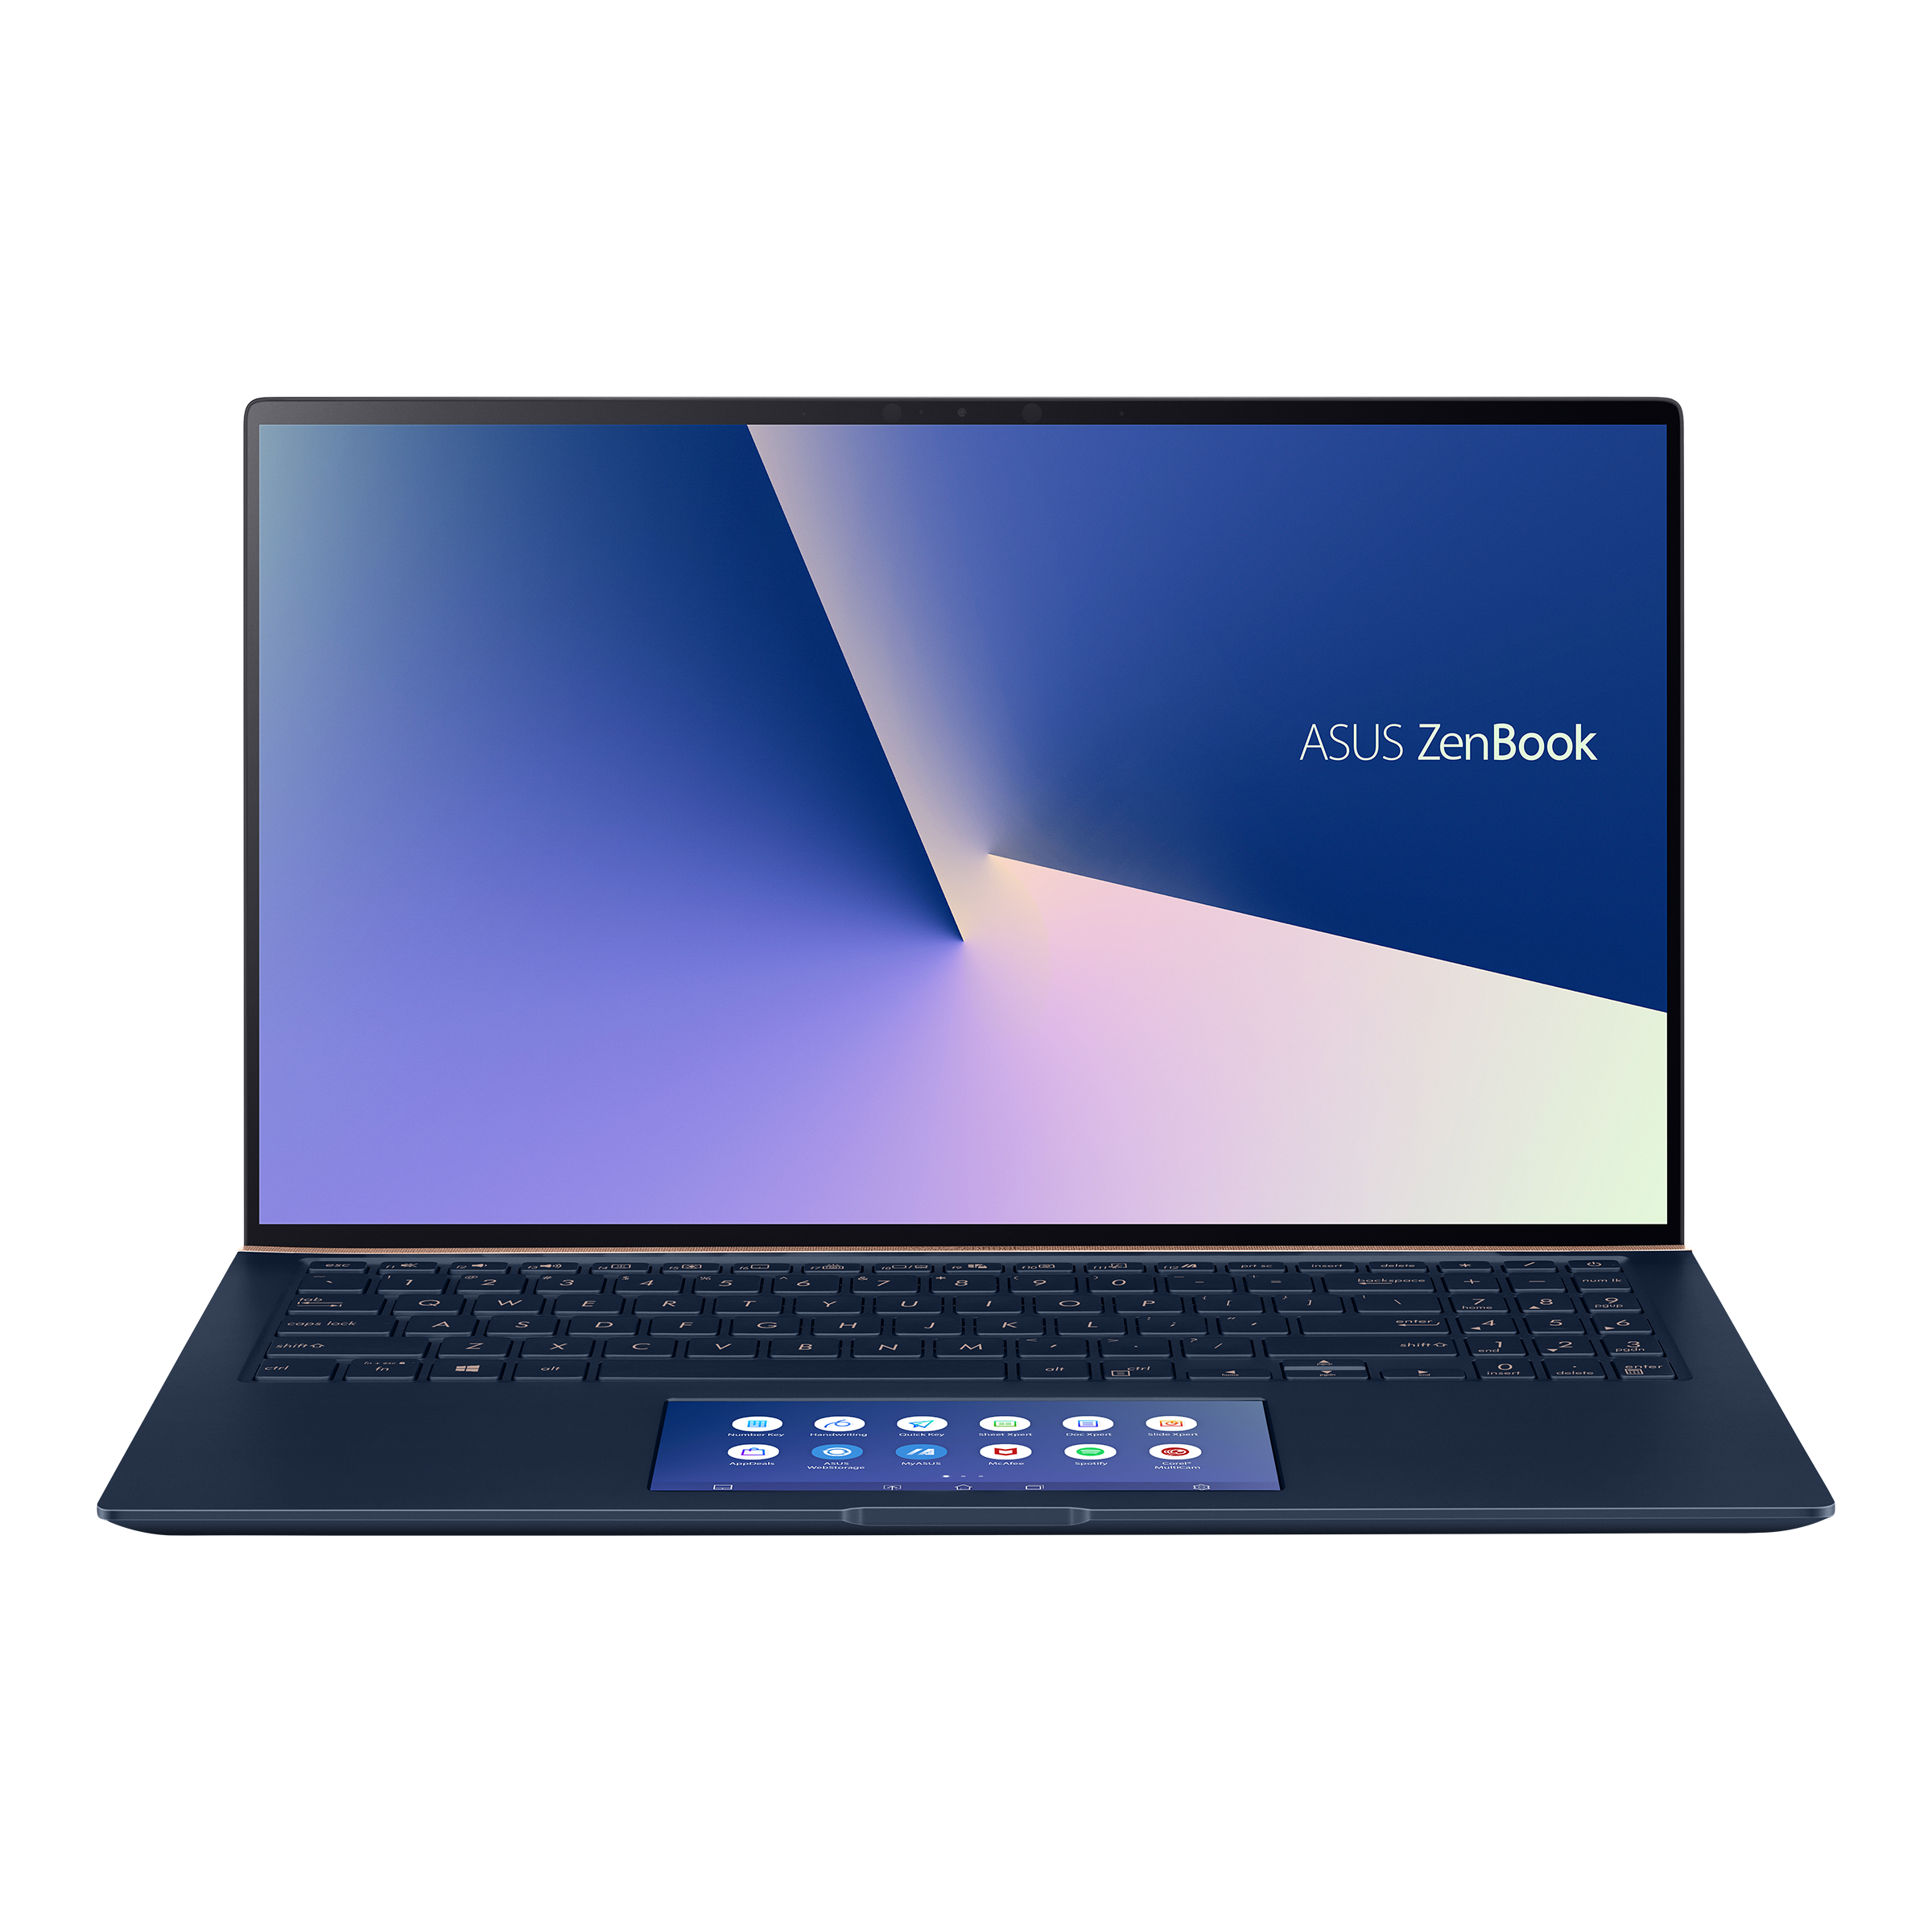 Zenbook UX530｜Laptops For Home｜ASUS Global